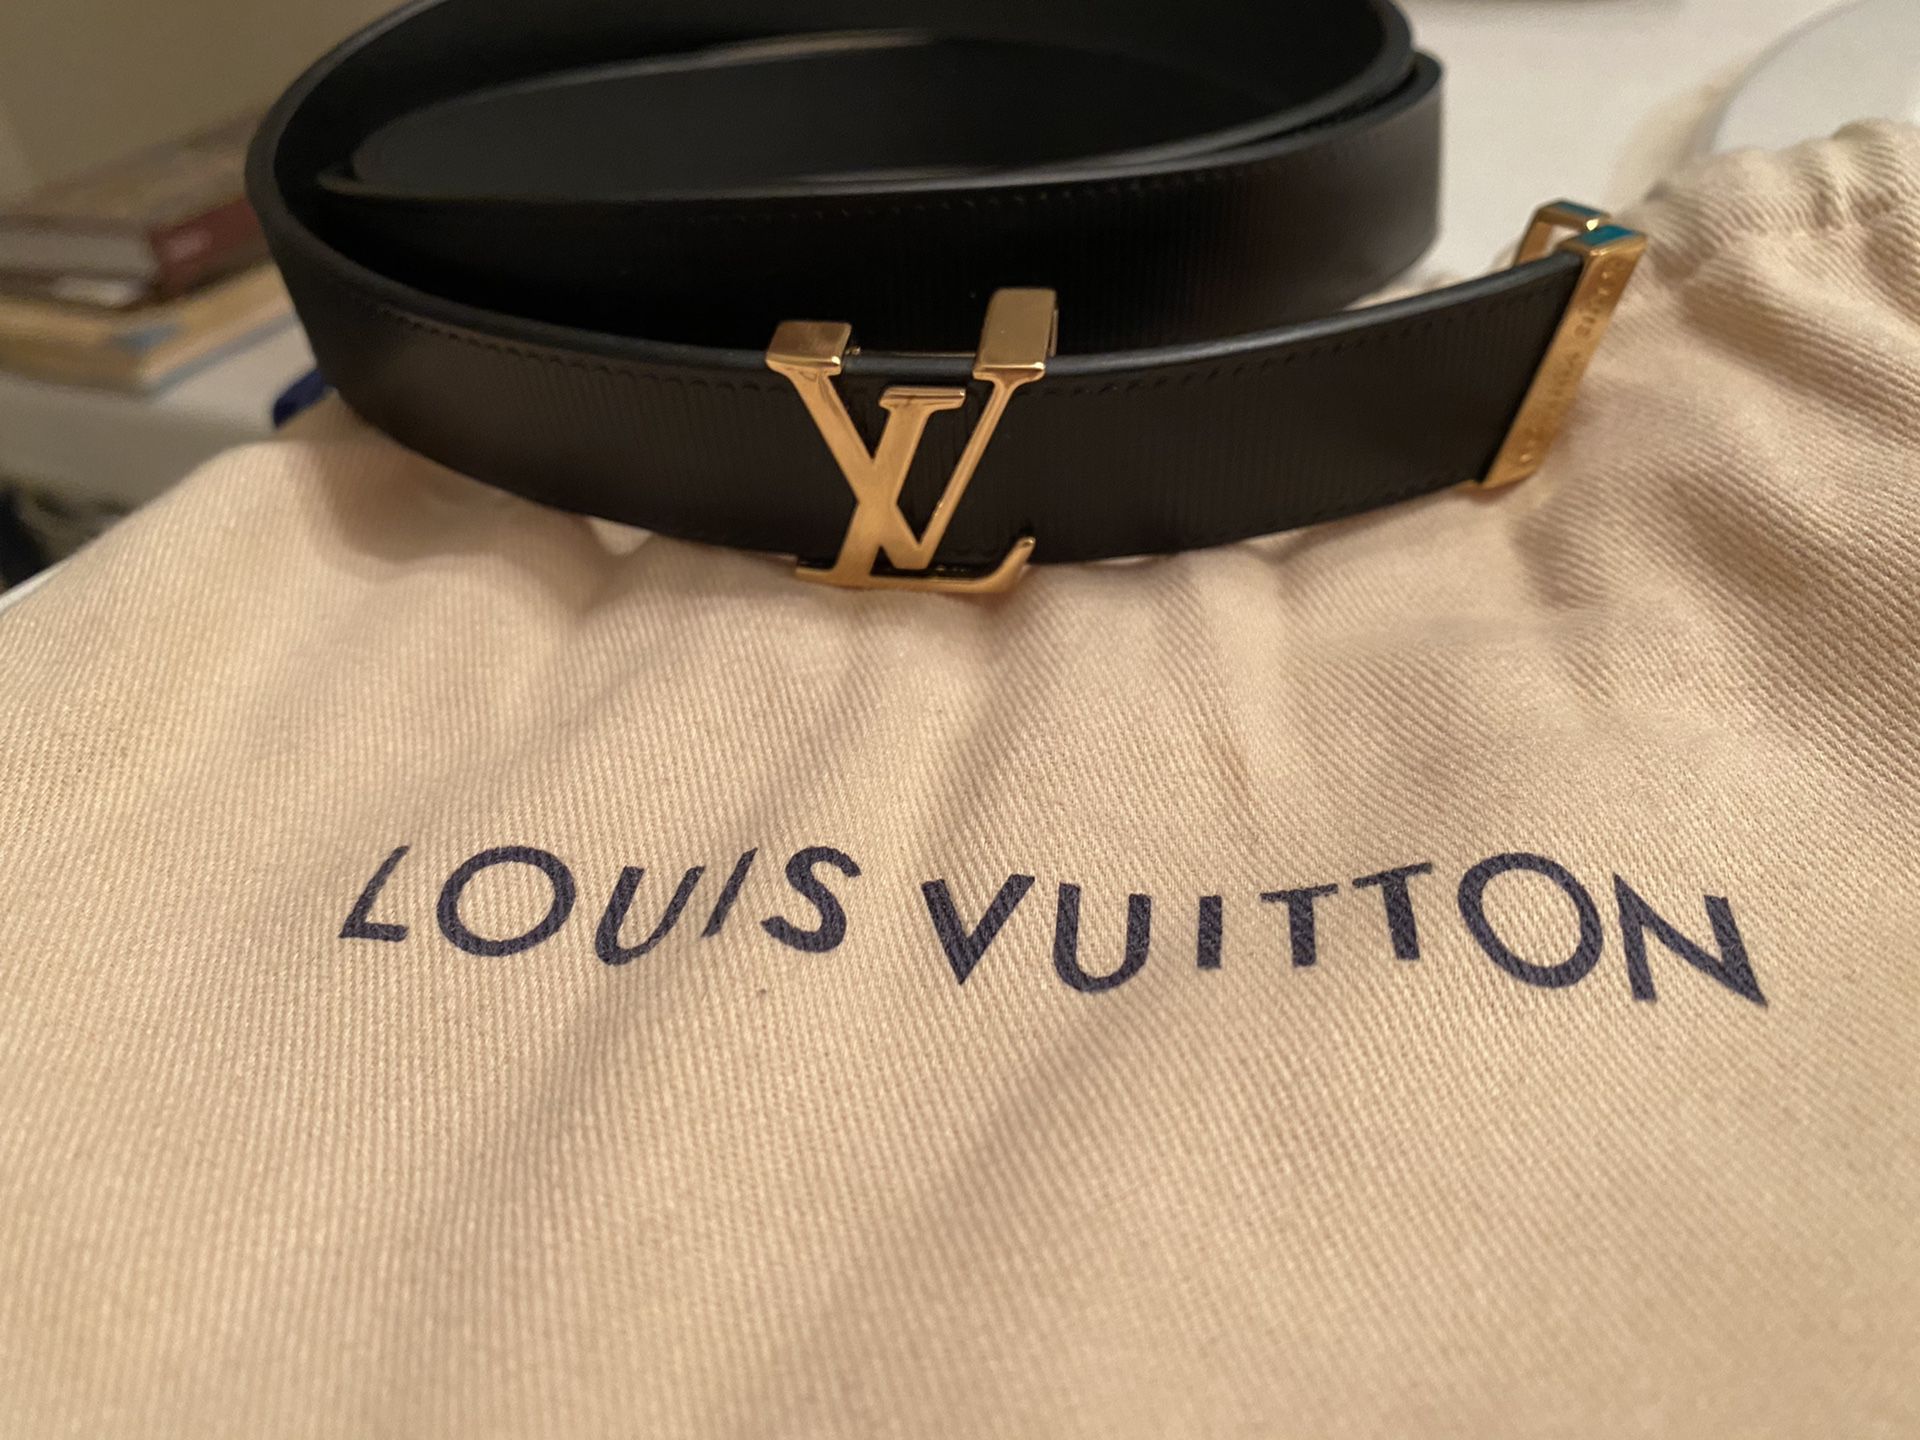 Brand new (Never worn) Louis Vuitton "Initiales" Belt 20mm. $535 retail.